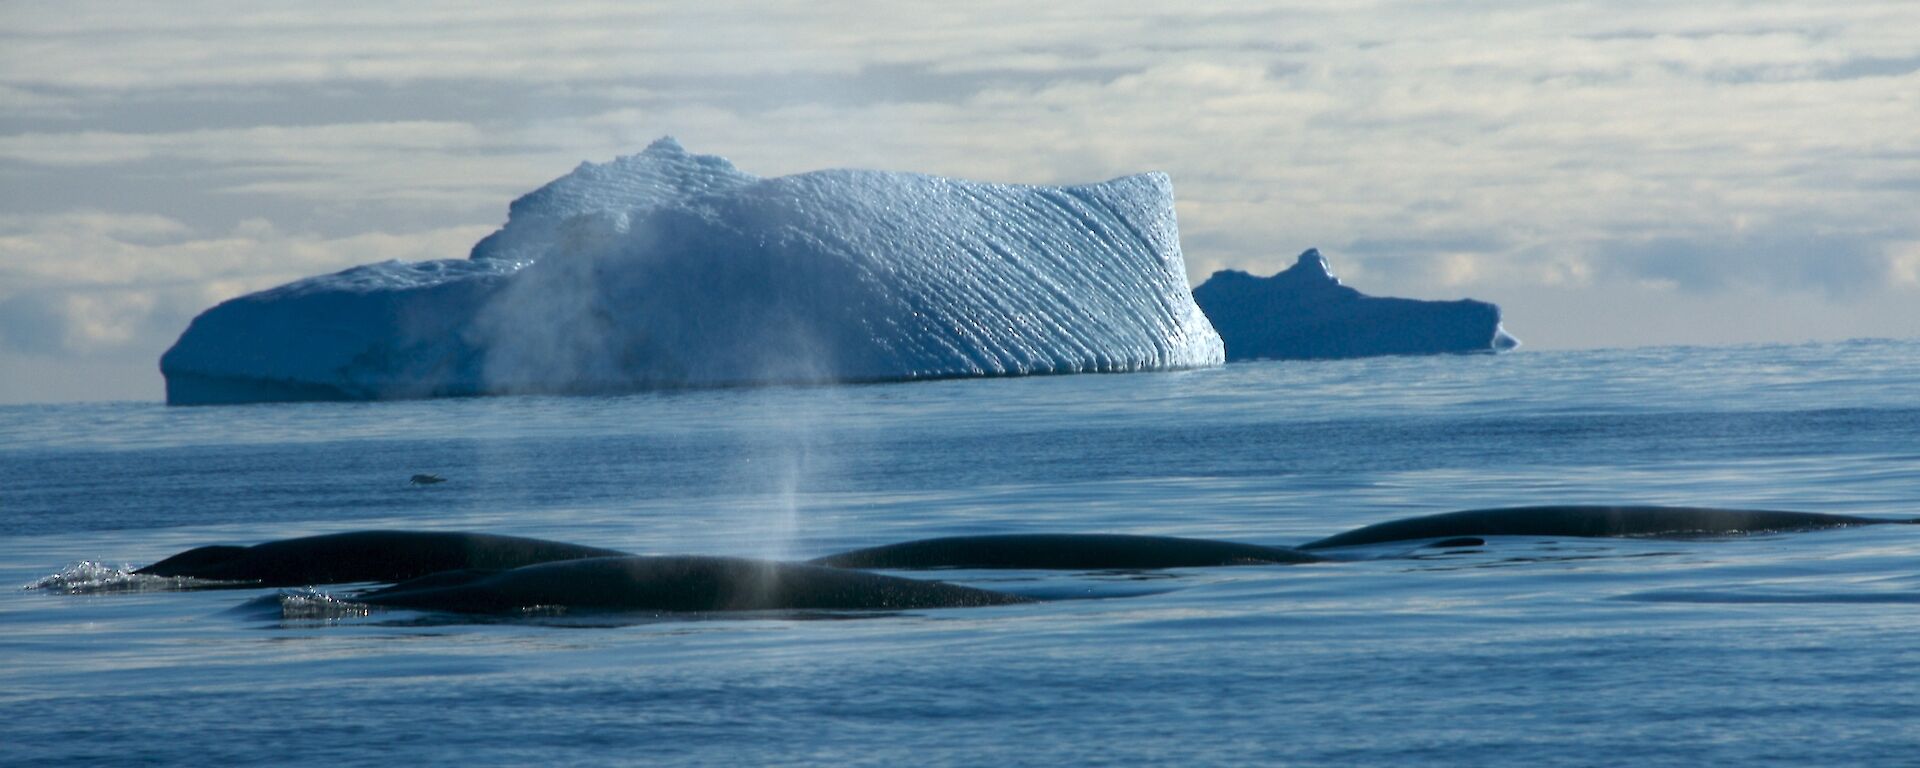 Minke Whales off Davis station in Antarctica